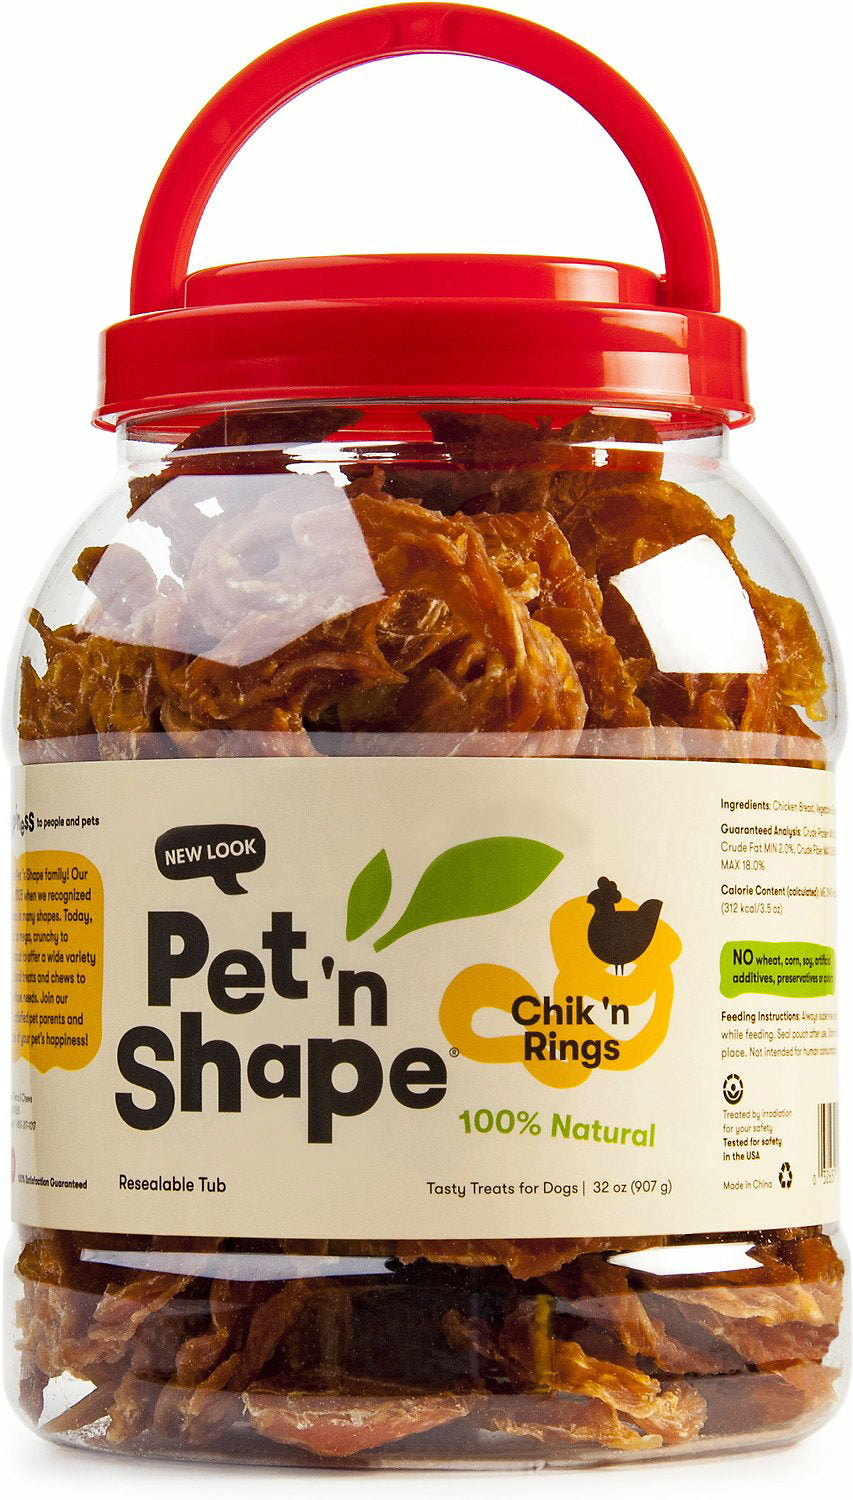 Pet 'n Shape Chik 'n Rings Dog Treats, Tub, 2 Pound, 2 Pack